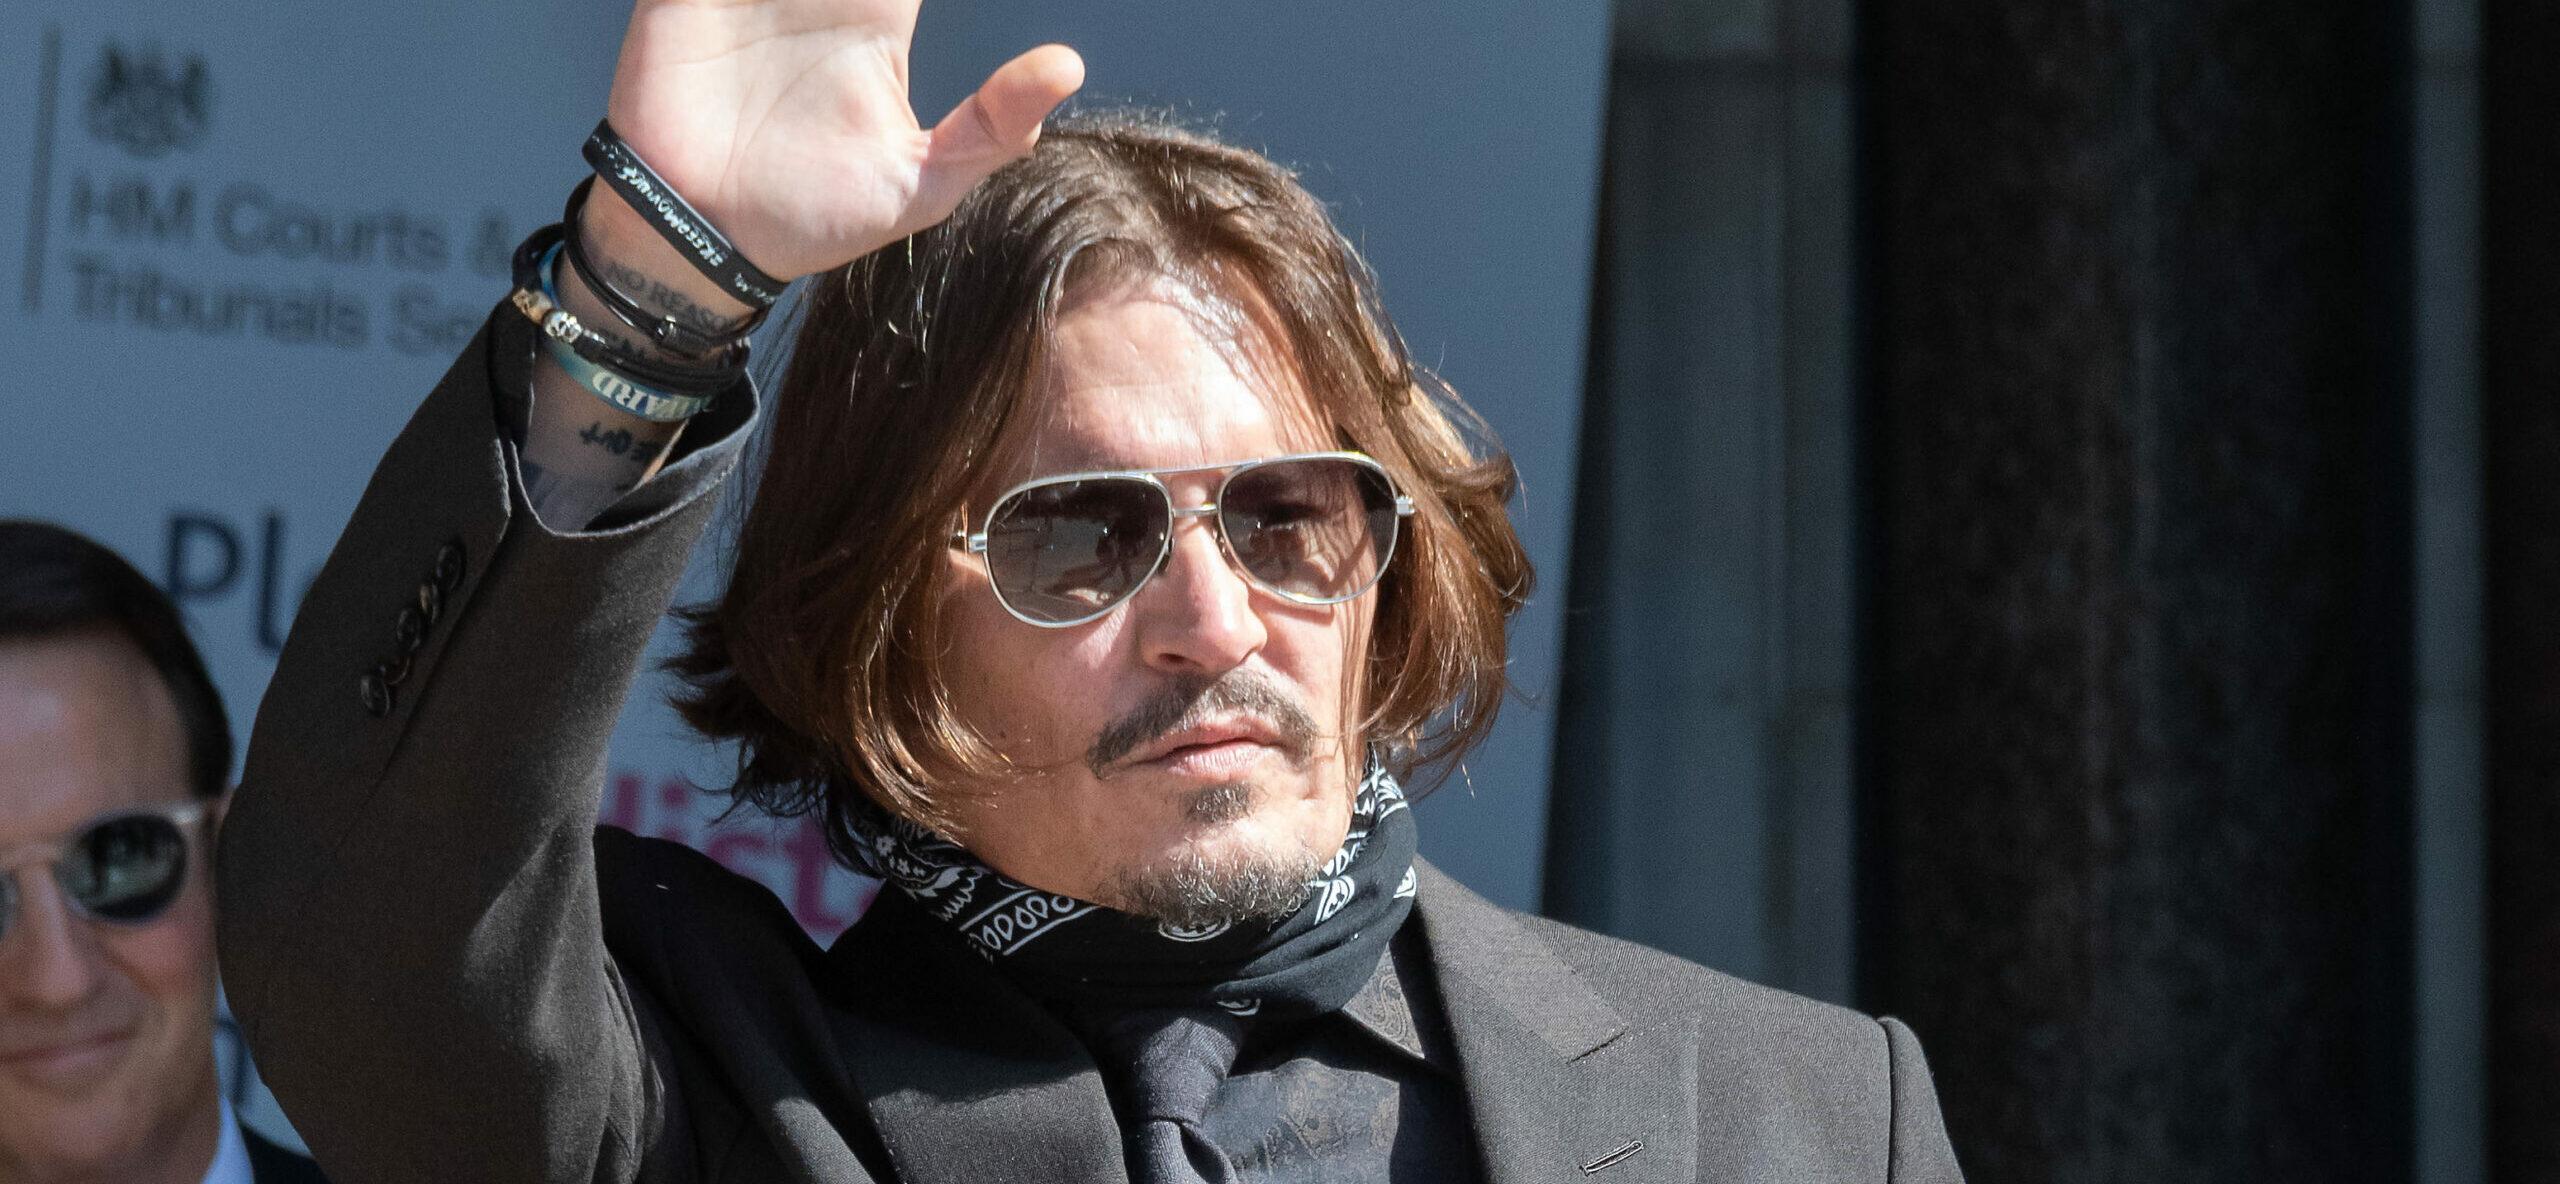 Home Where Johnny Depp Severed His Finger Sells For $40M